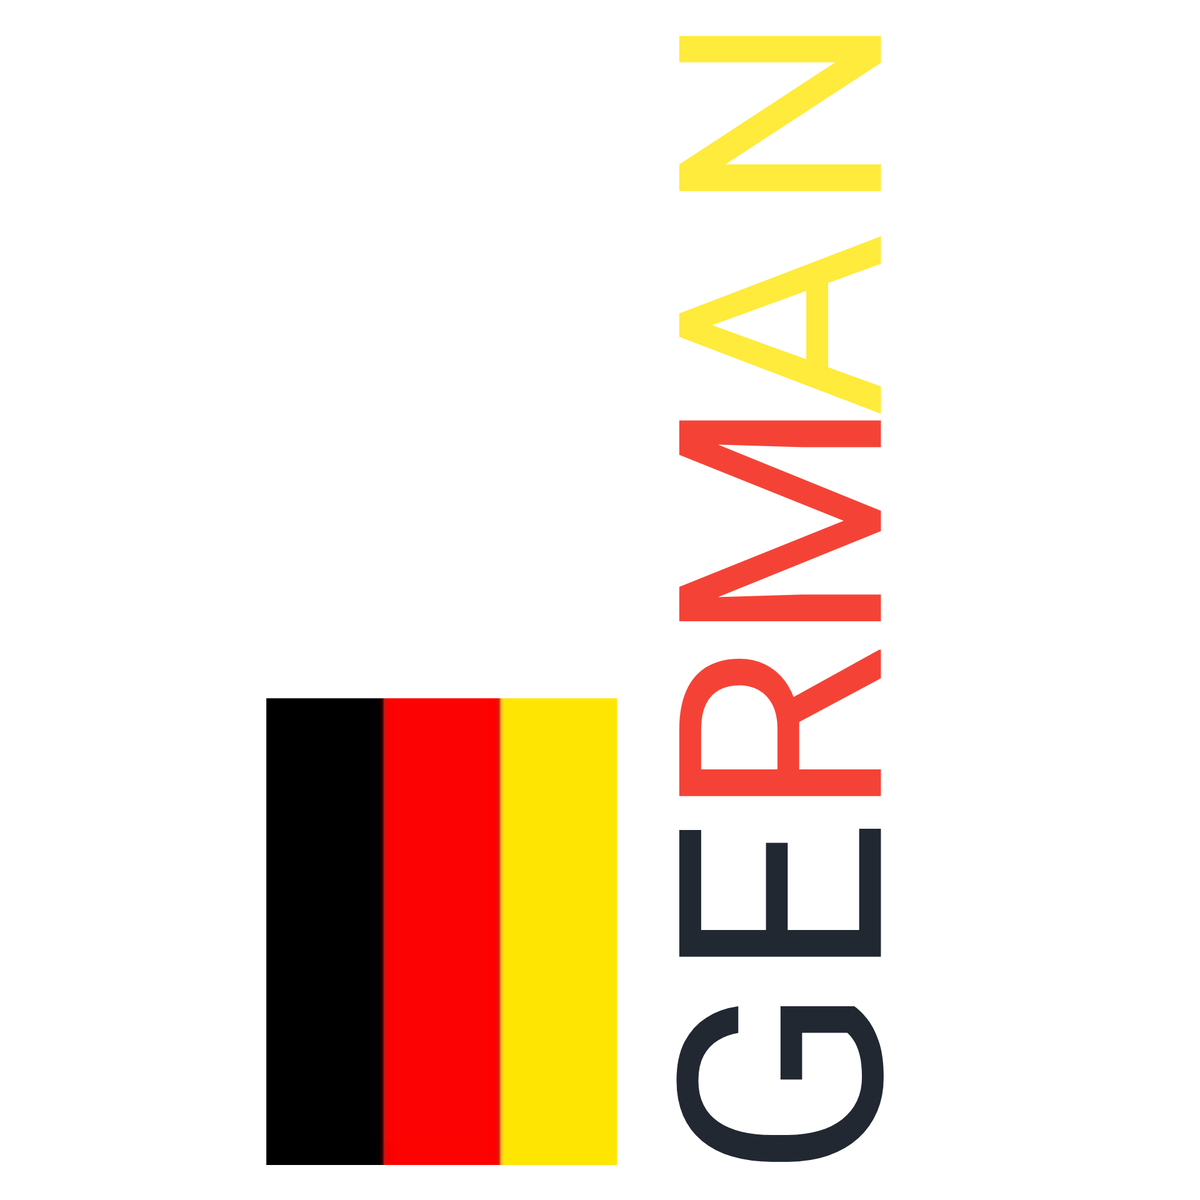 German Design Art.
#logo #logos #logodesign #logomaker #DESIGNART #design #designinspiration #Font #Designship2022 #designthinking #design #designjobs #DesignGrowth #designtwitter #Logodesigner